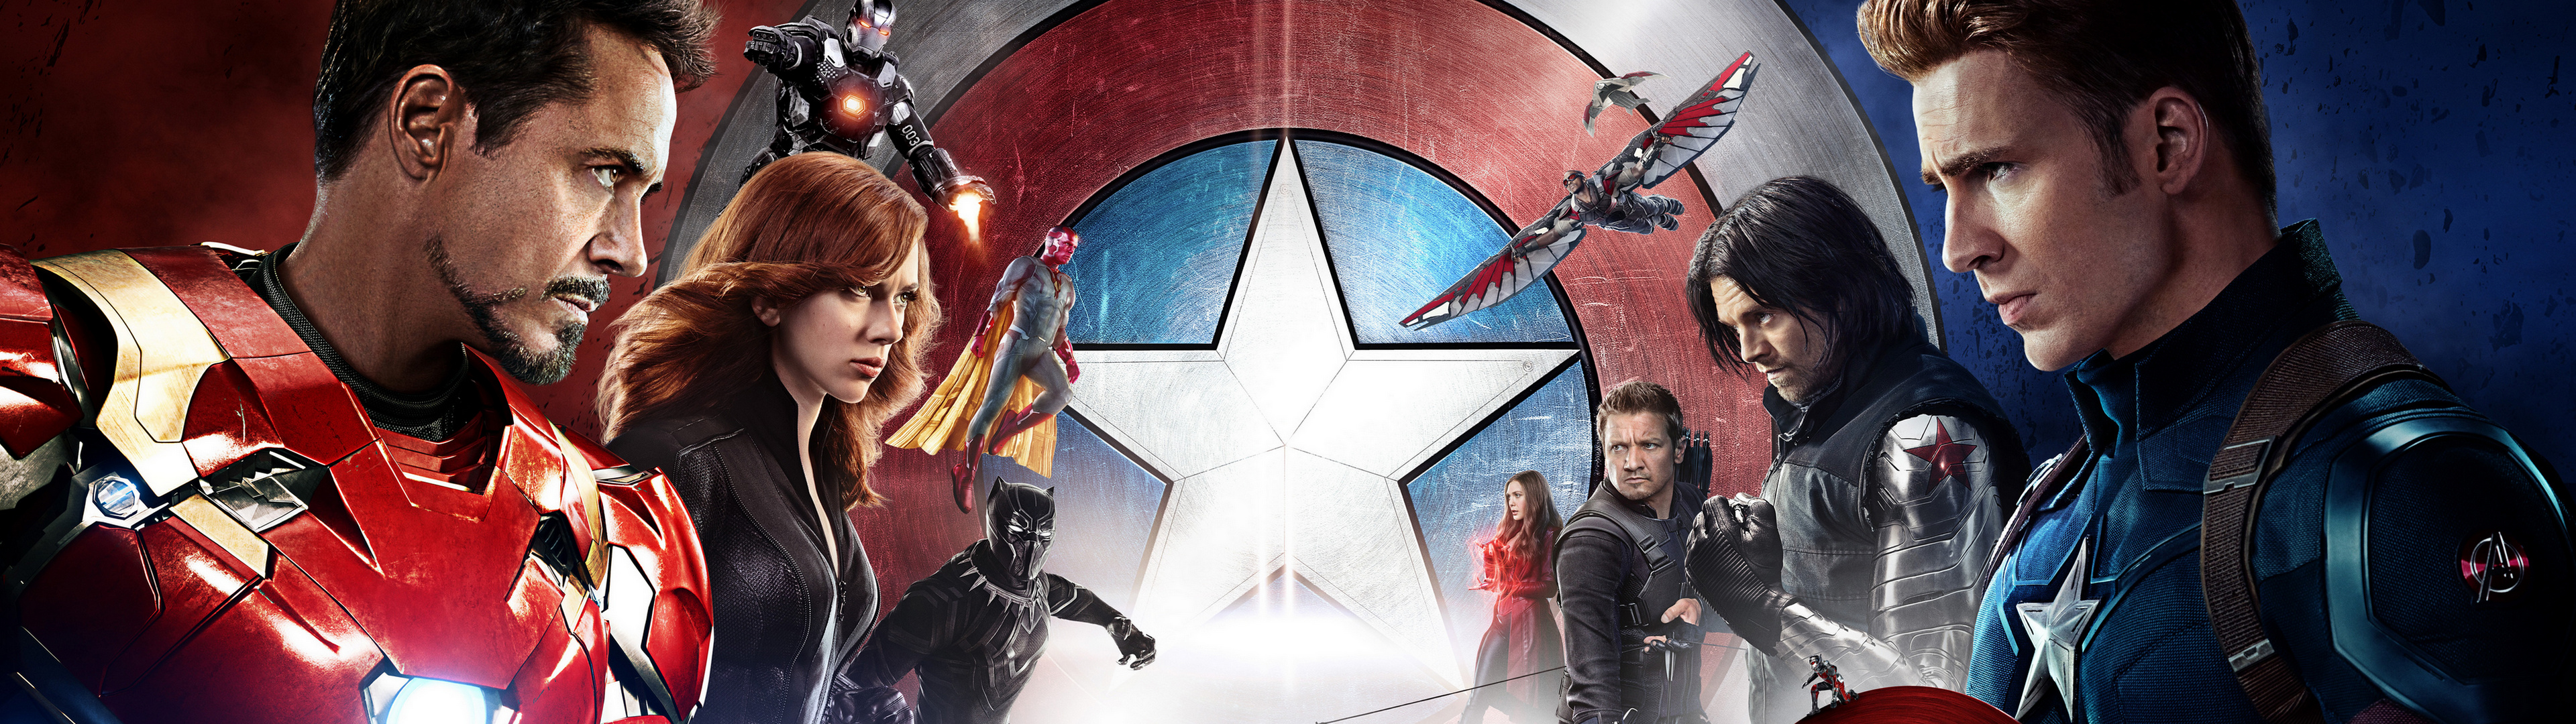 Captain America: Civil War, Multiwall, Battle scenes, Superhero showdown, 3840x1080 Dual Screen Desktop